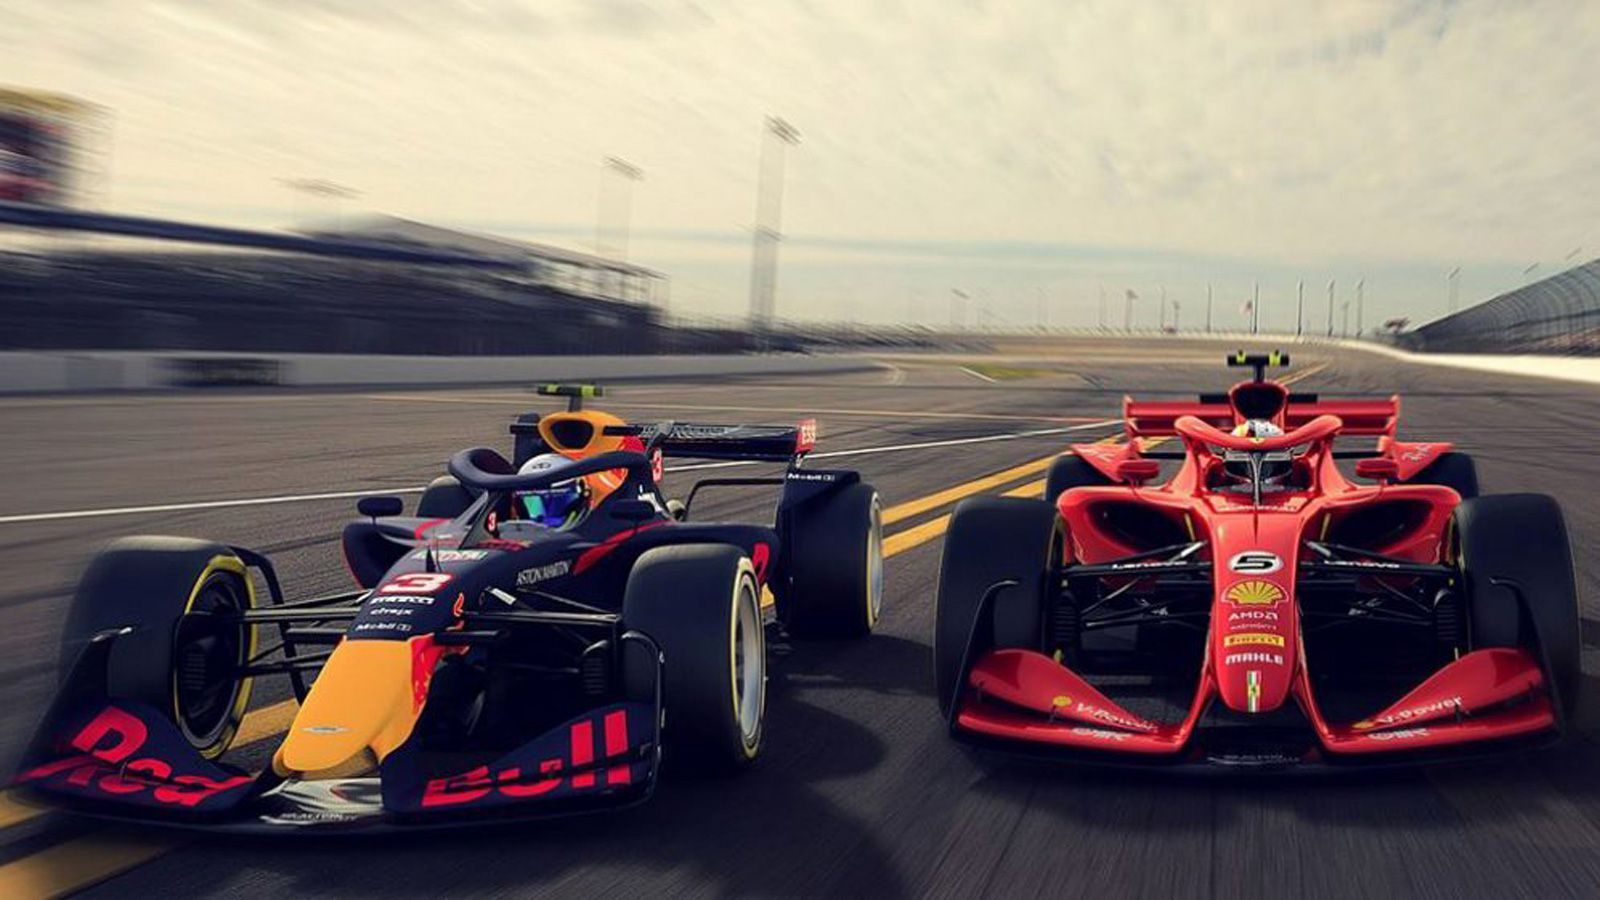 Ferrari boss: 2021 Formula 1 concept car looks 'like an old Champ Car'